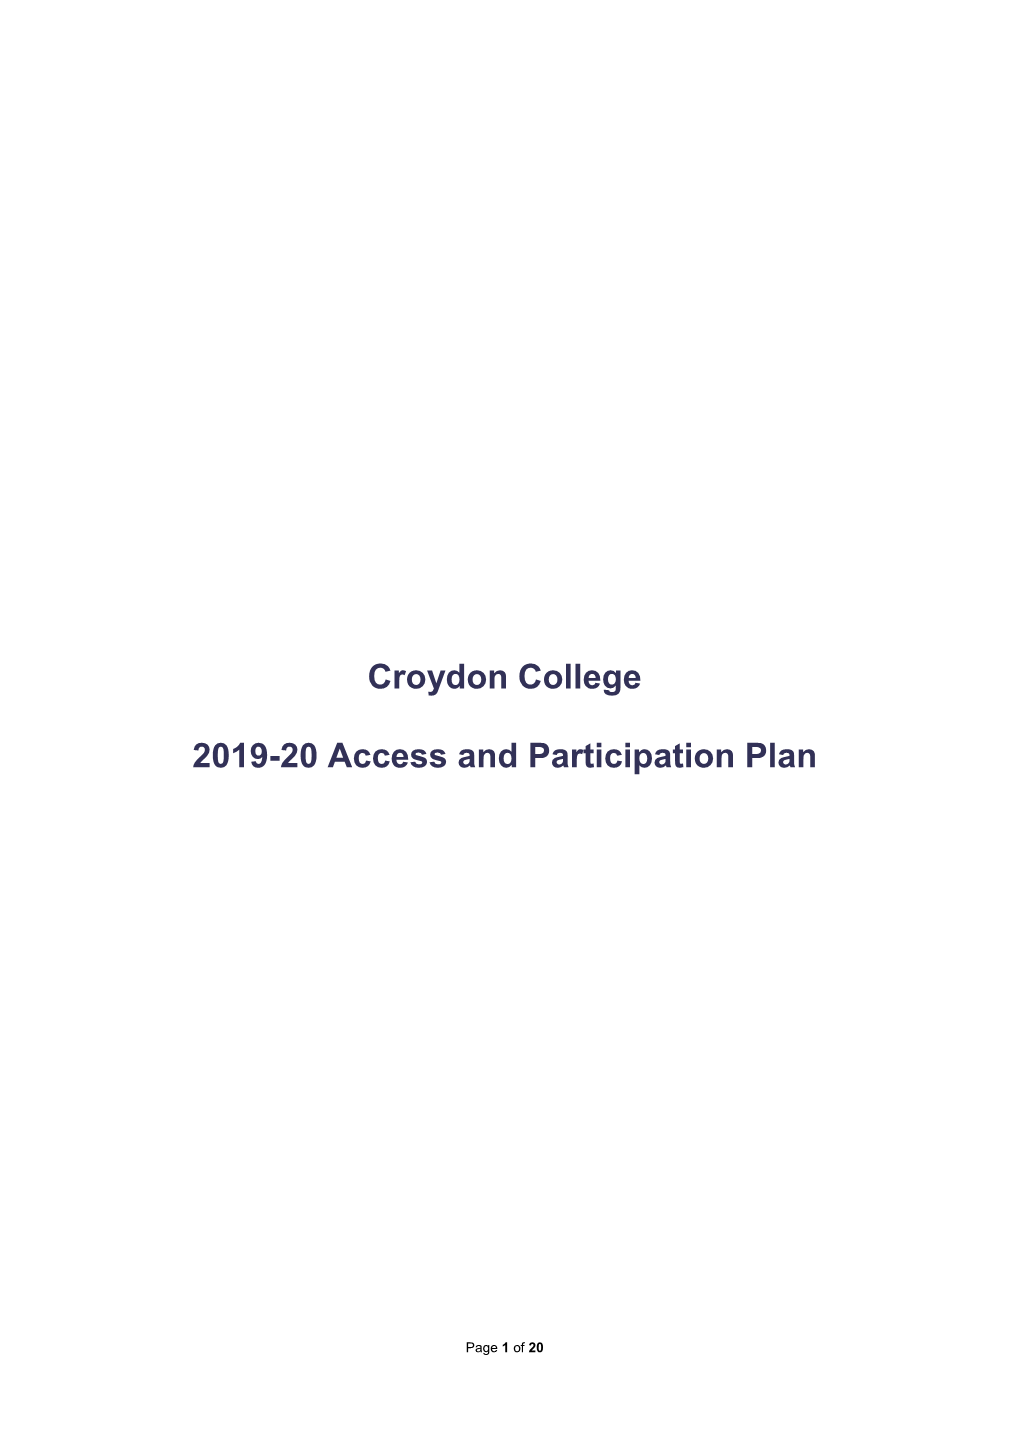 Croydon College 2019-20 Access and Participation Plan